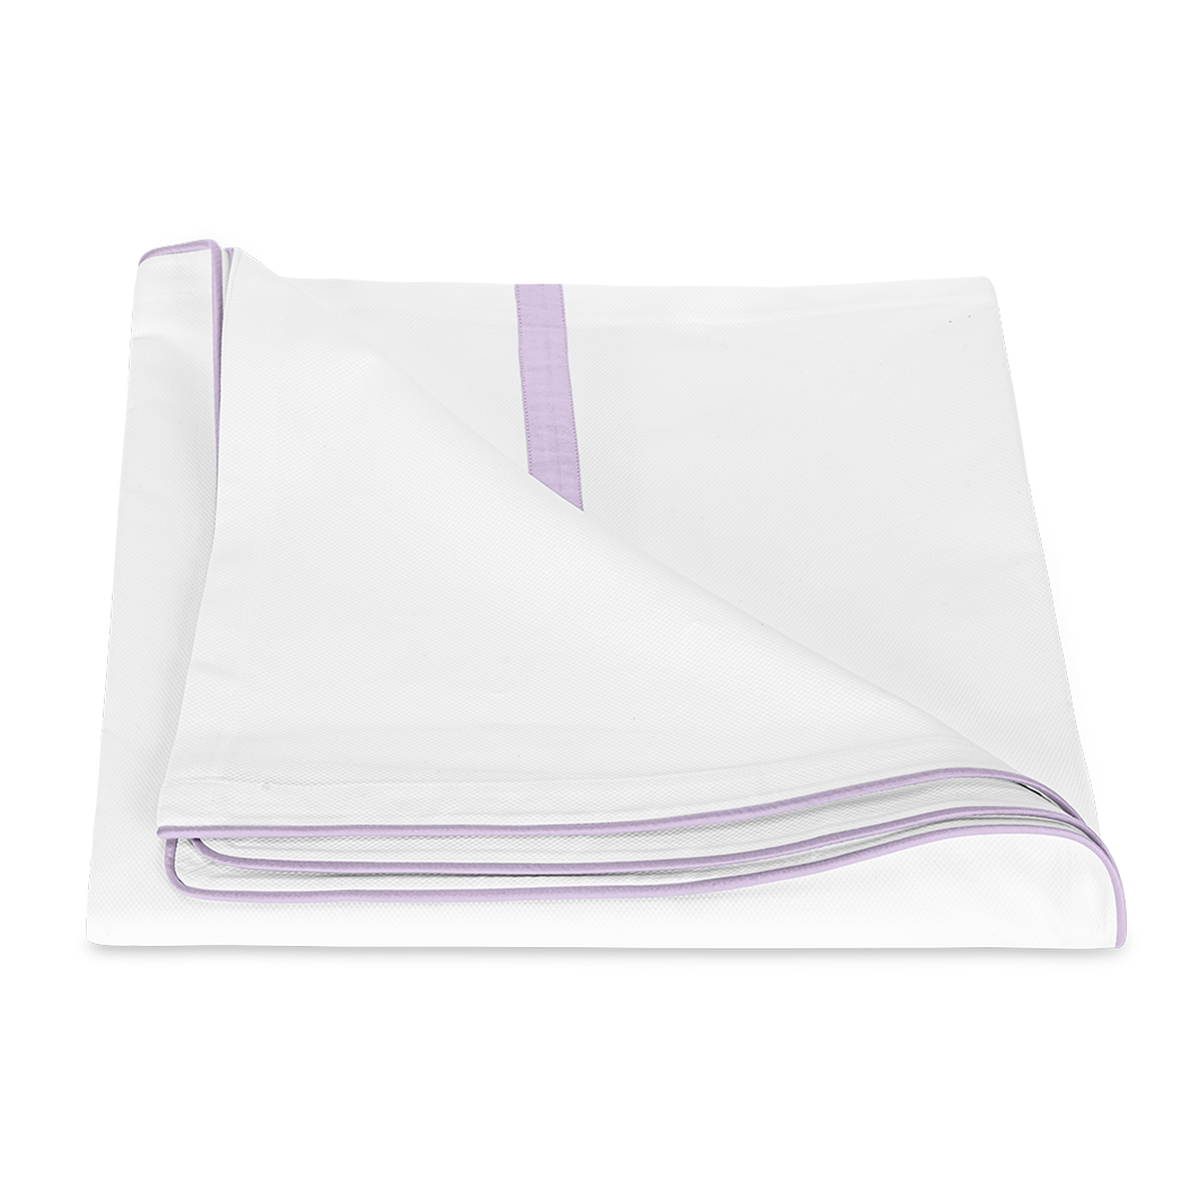 Folded Duvet Cover of Matouk Louise Pique Bedding in Color Violet